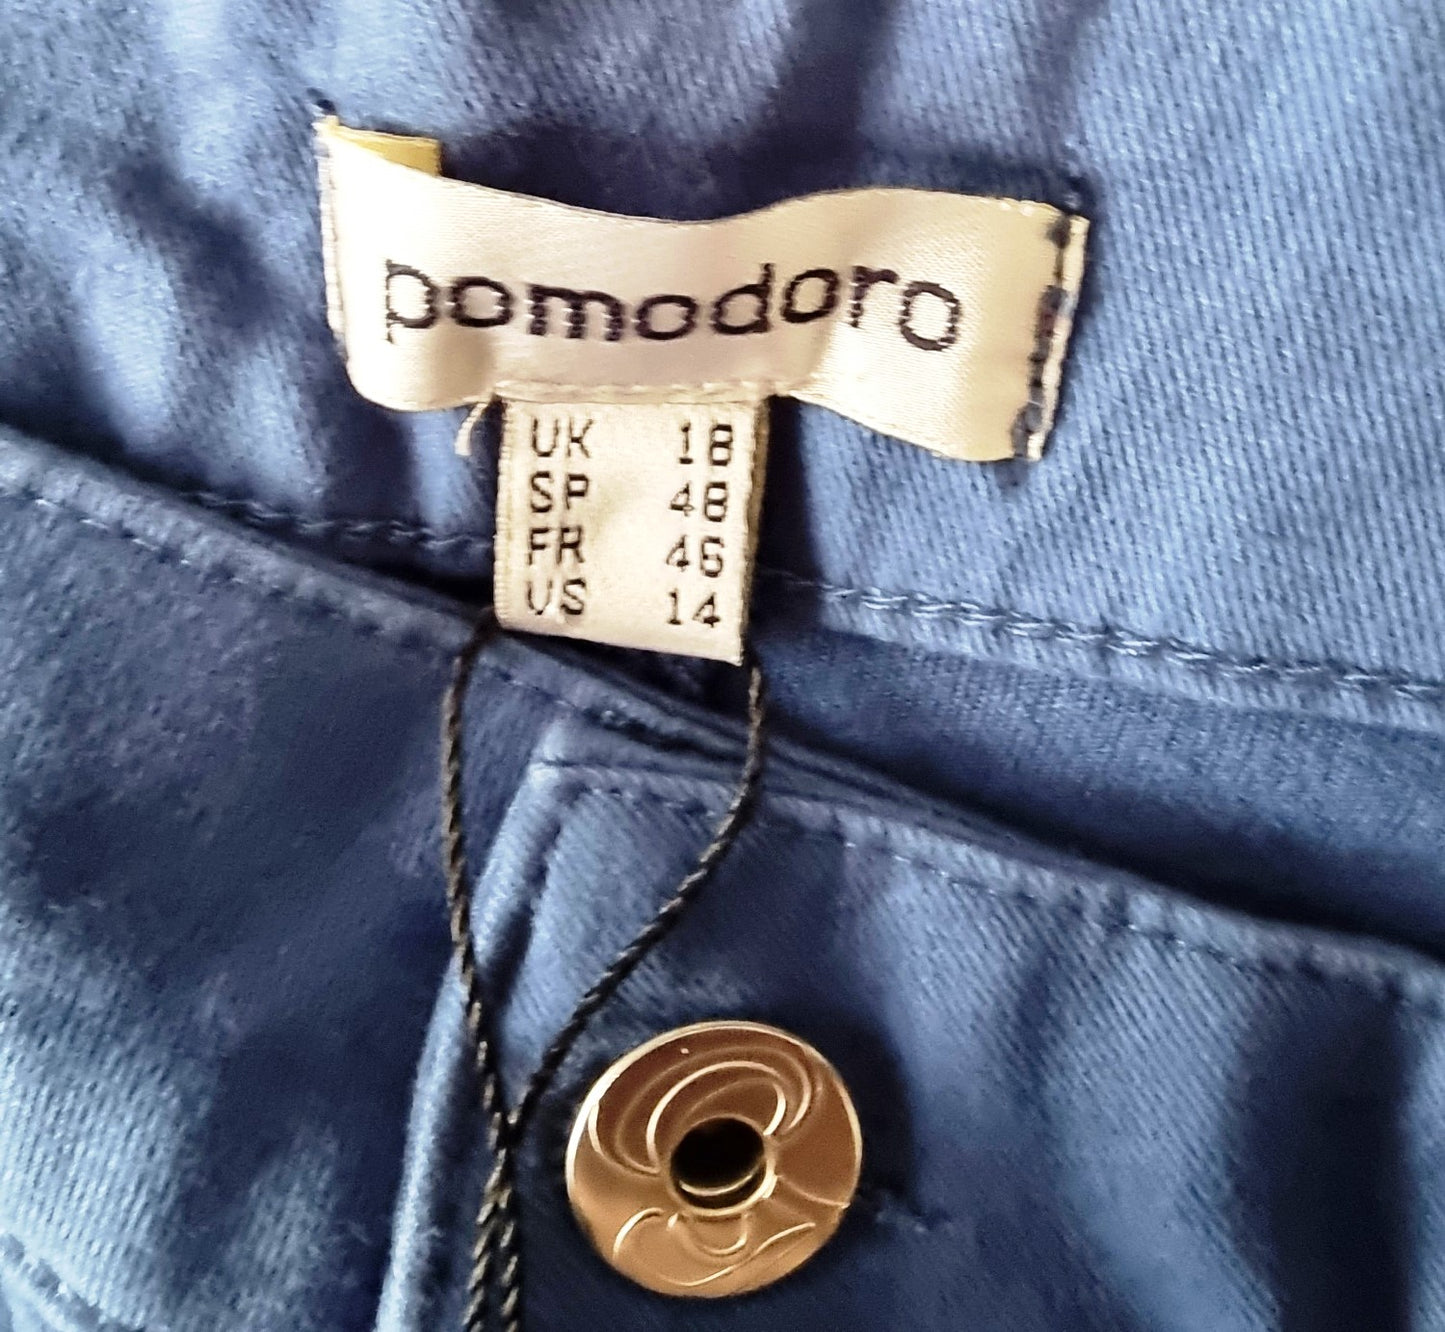 Pomodoro Mid Blue Denim, Stretch Straight Leg Jeans UK 18 US 14 EU 48 BNWT Timeless Fashions